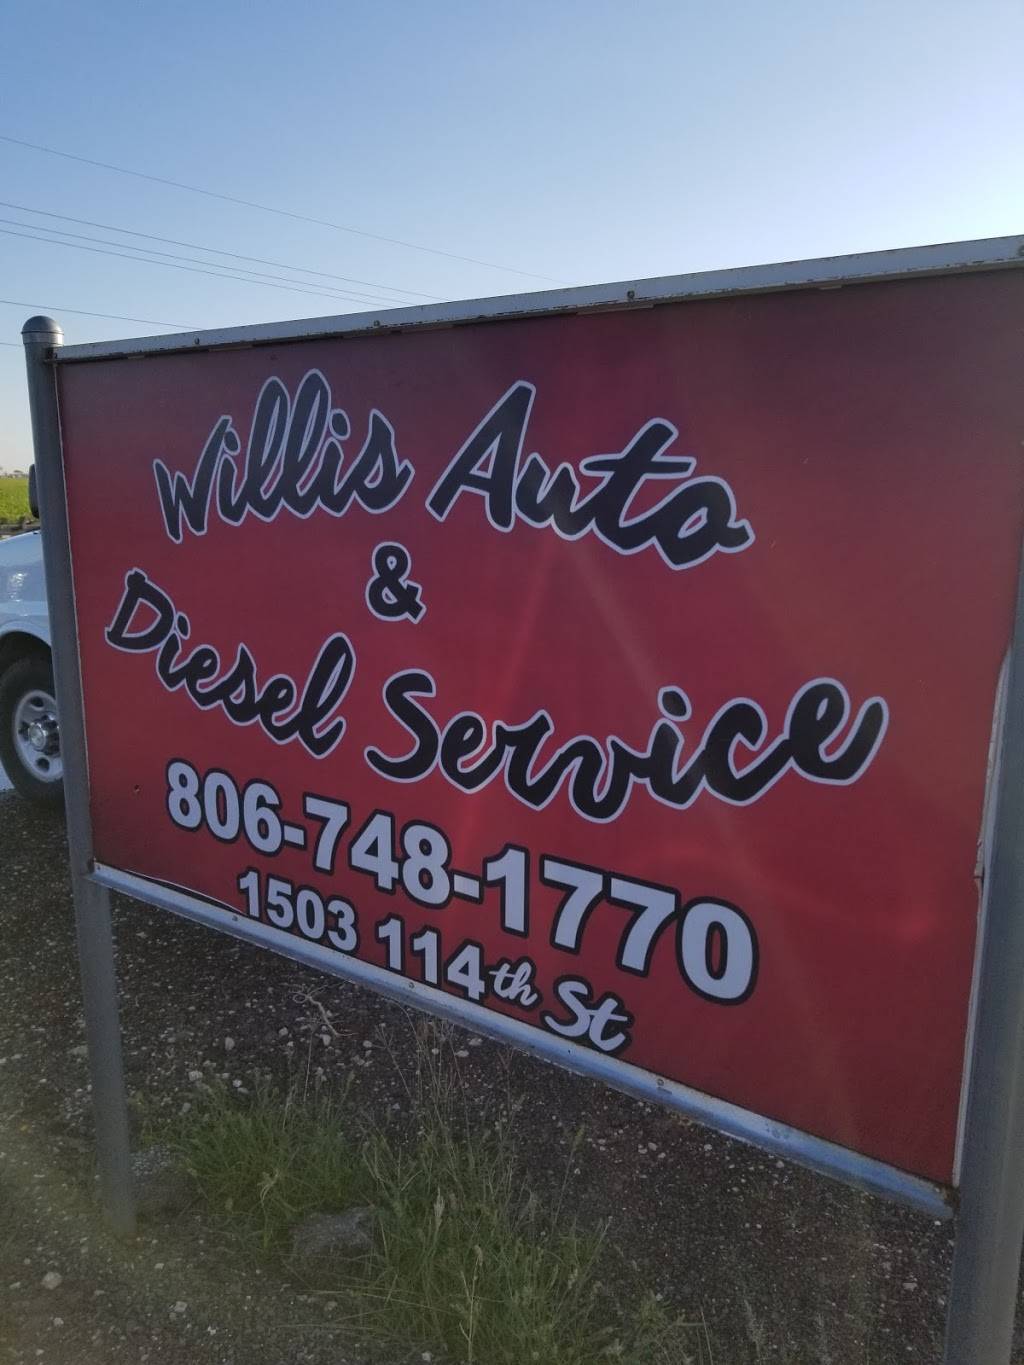 Willis Auto and Diesel Service LLC | 1503 114th St, Lubbock, TX 79423 | Phone: (806) 748-1770